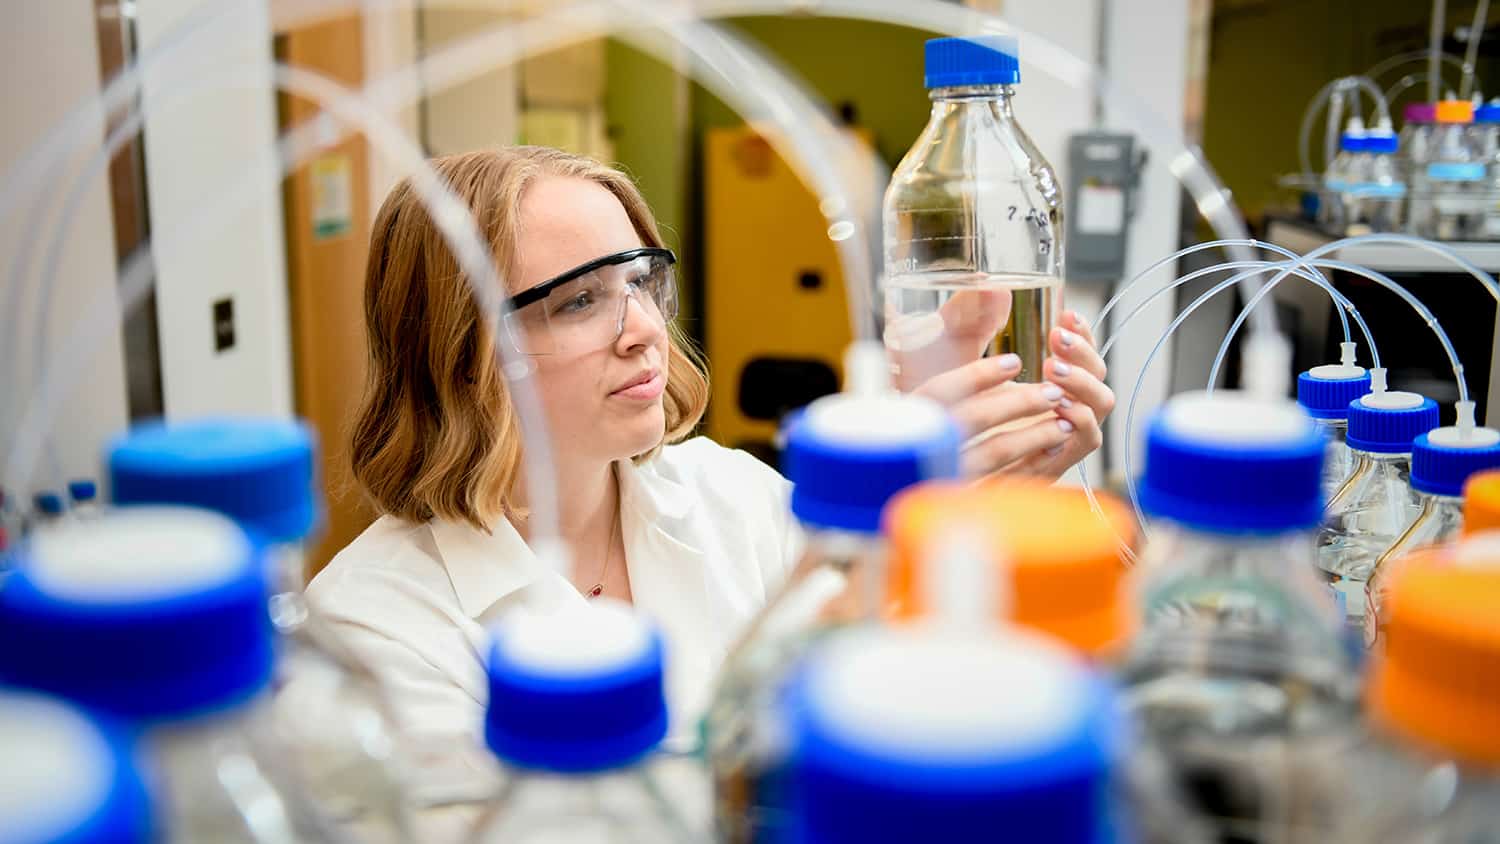 Graduate student Kaylie Kirkwood works in a chemistry lab